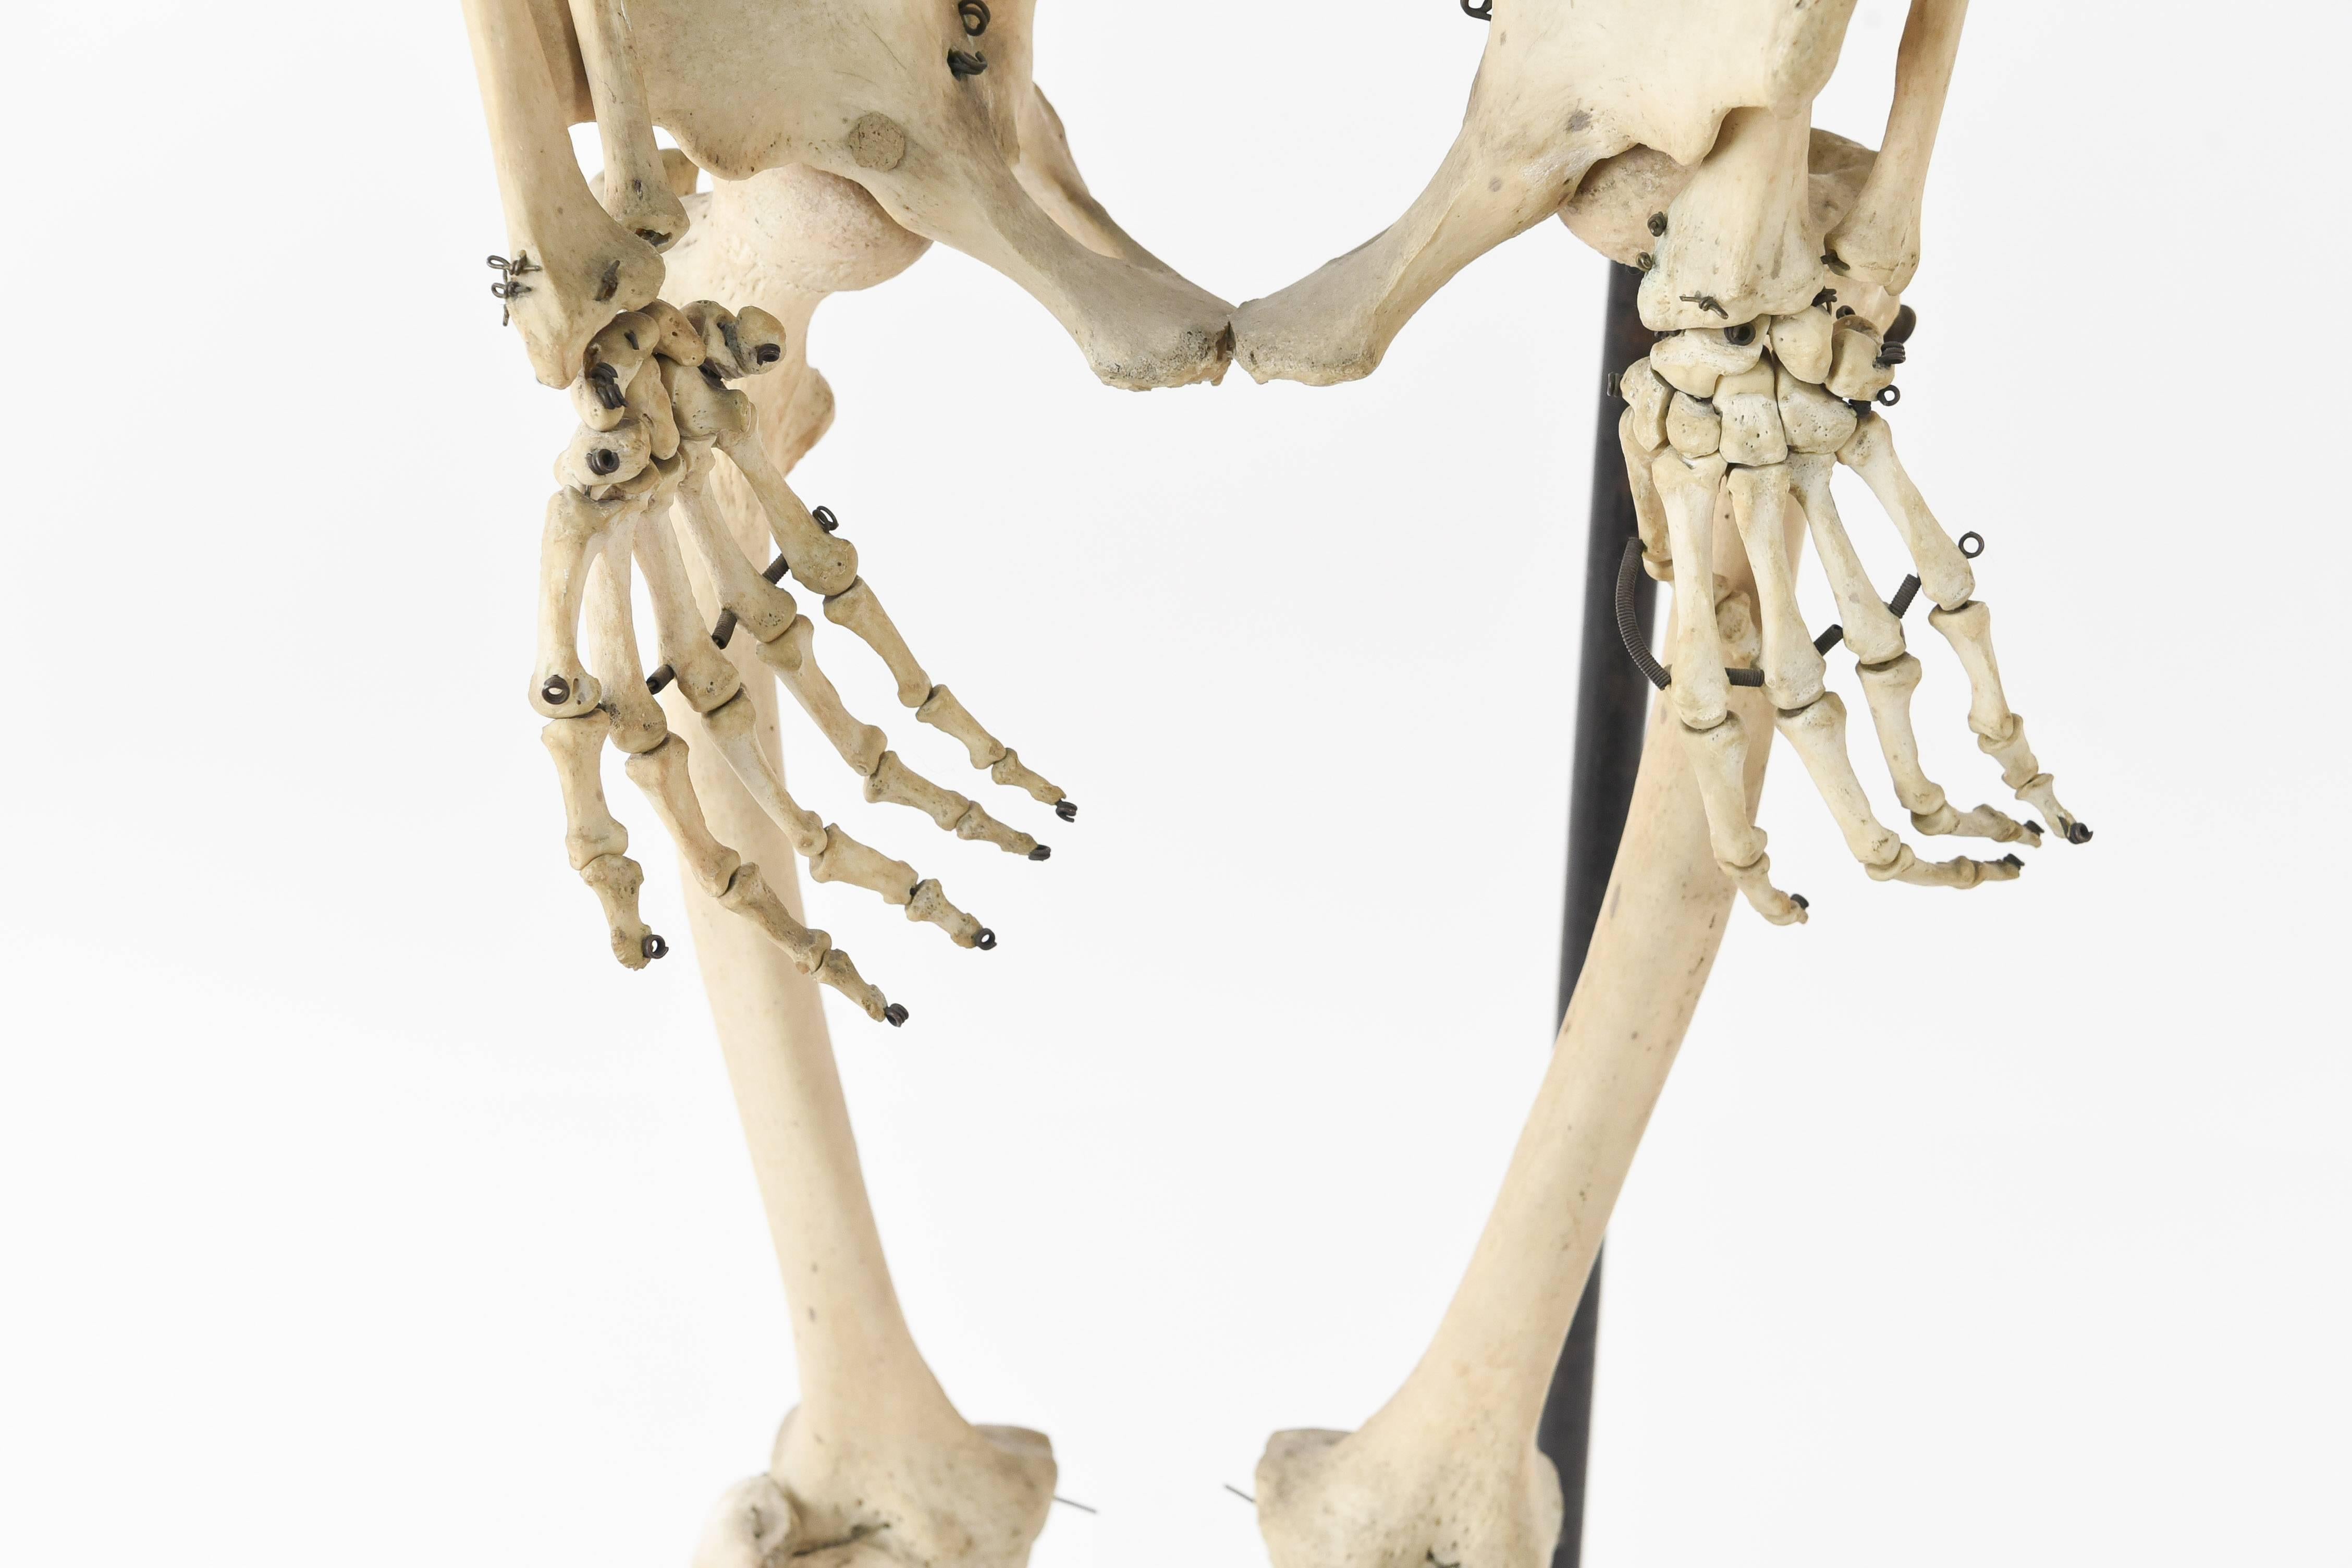 real human skeleton images